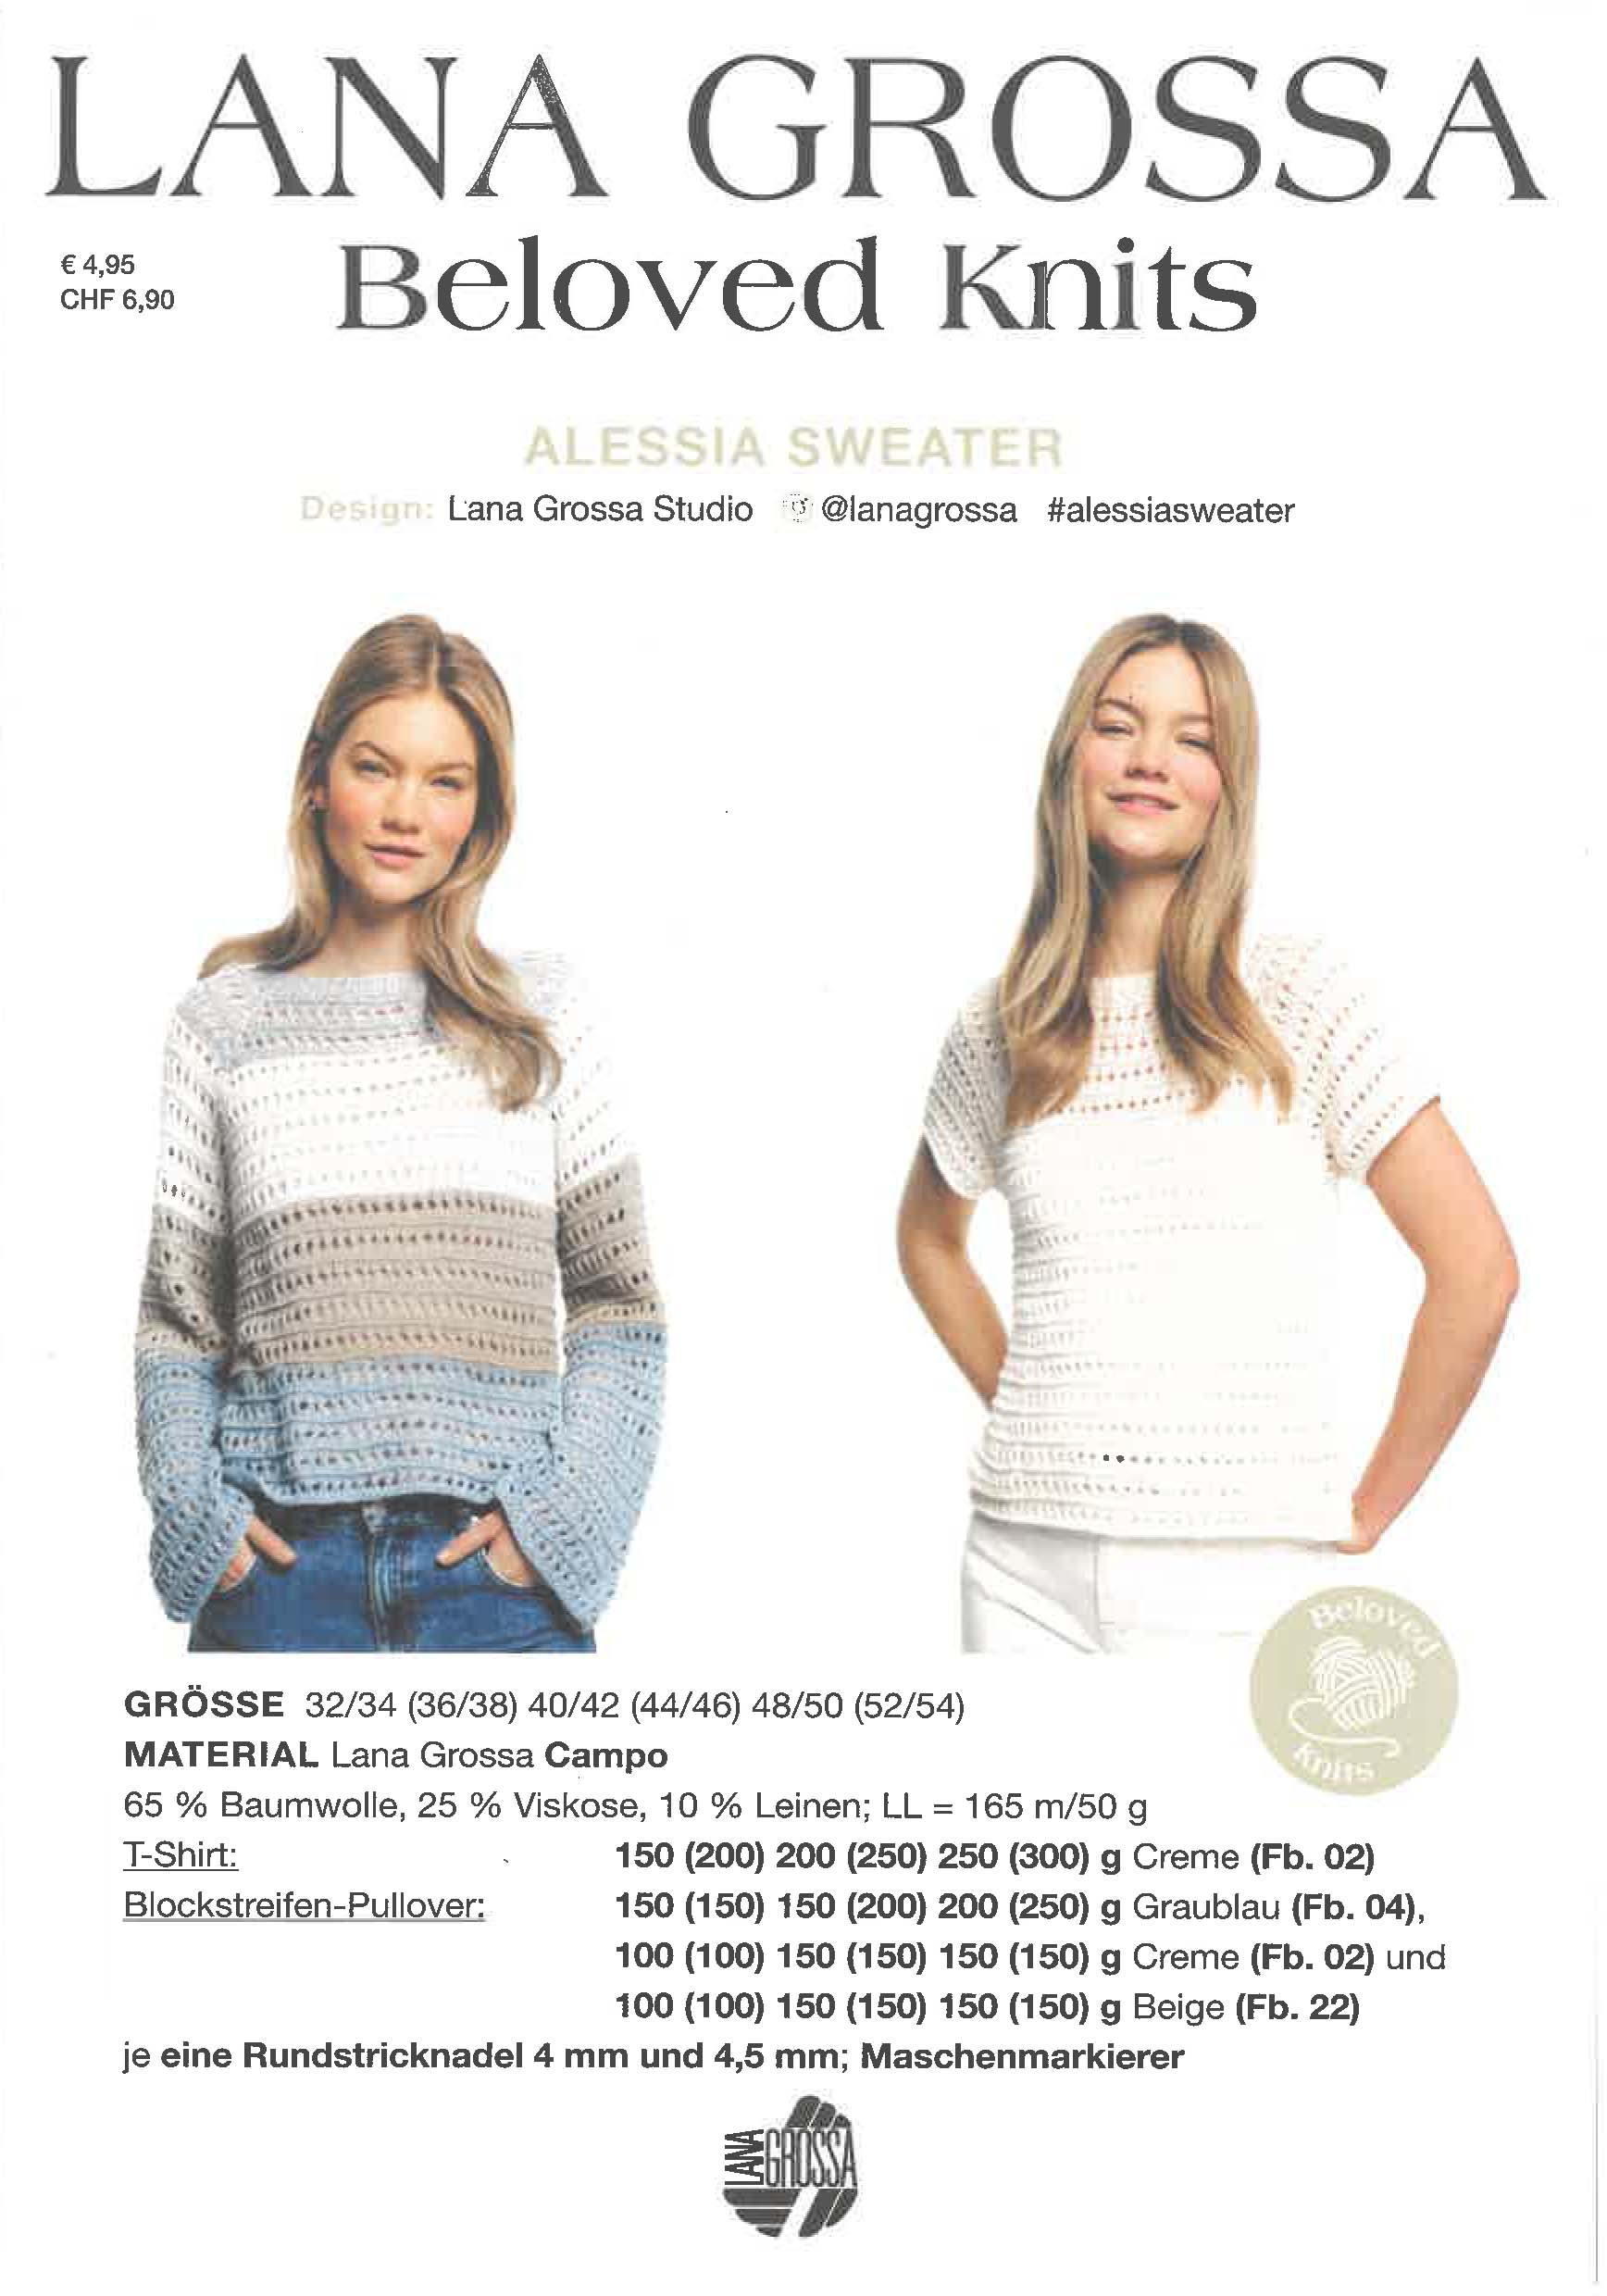 Alessia Sweater